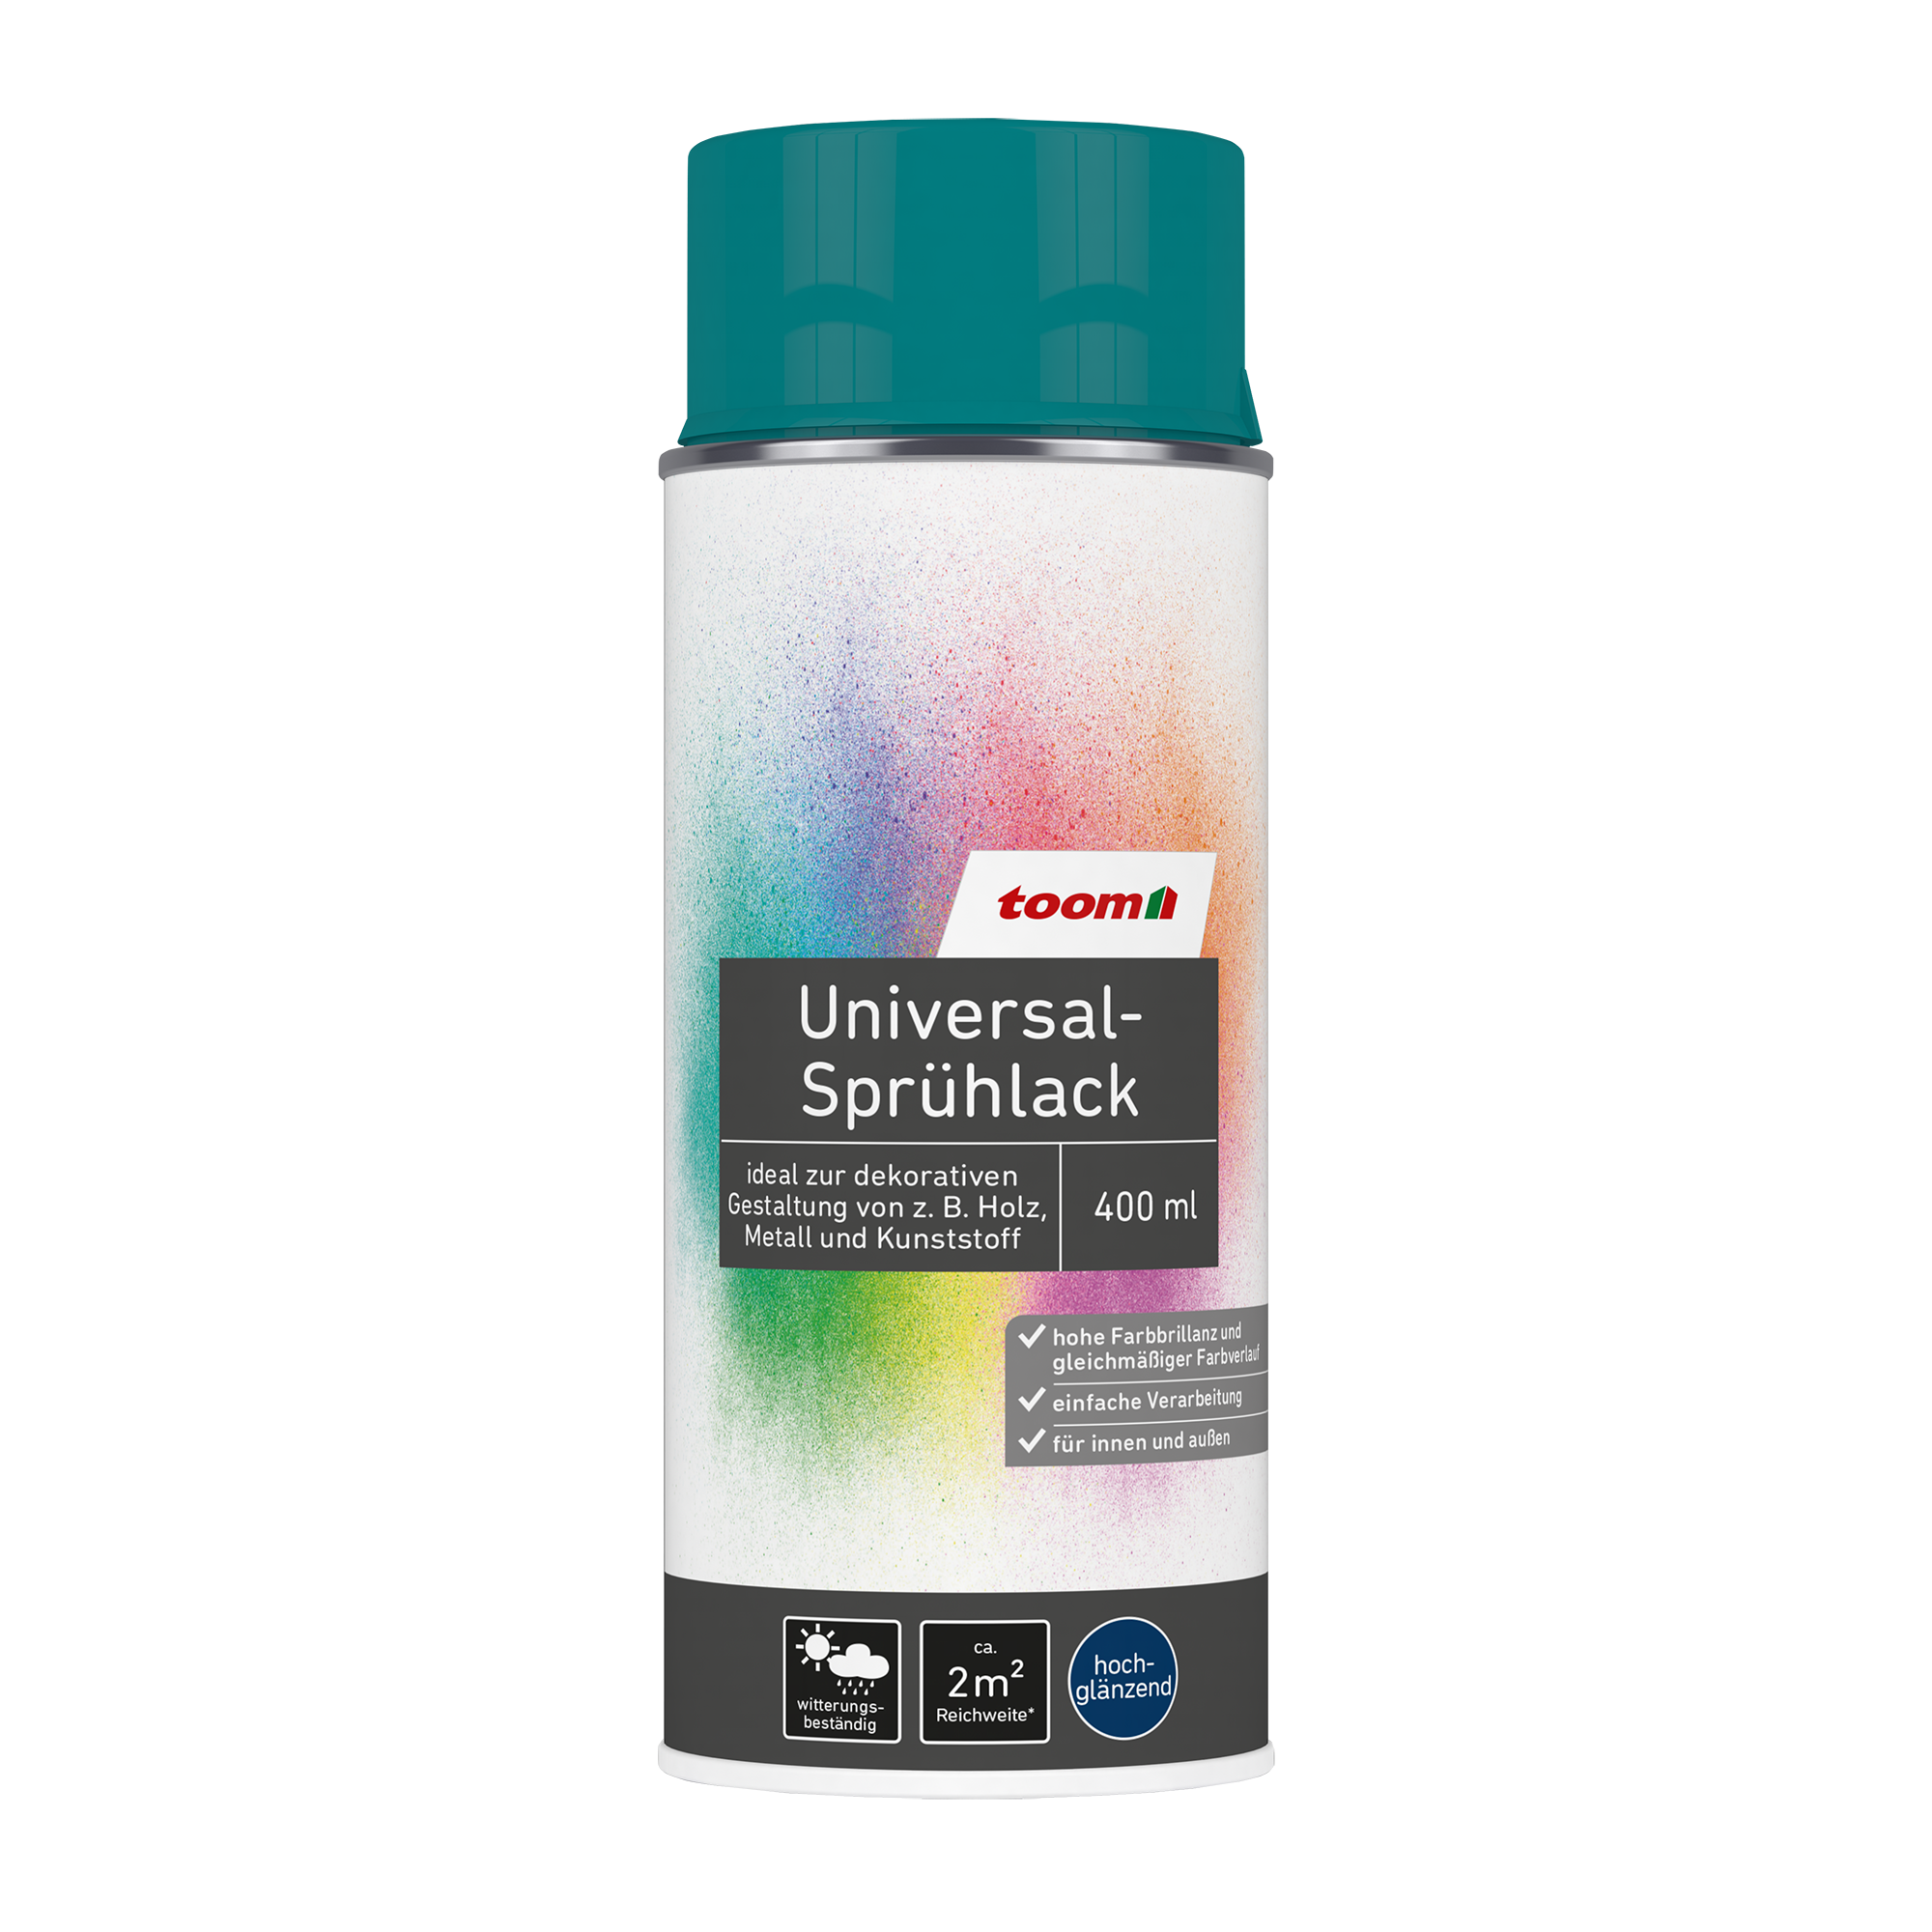 Universal-Sprühlack 'Südseetraum' petrolfarben glänzend 400 ml + product picture